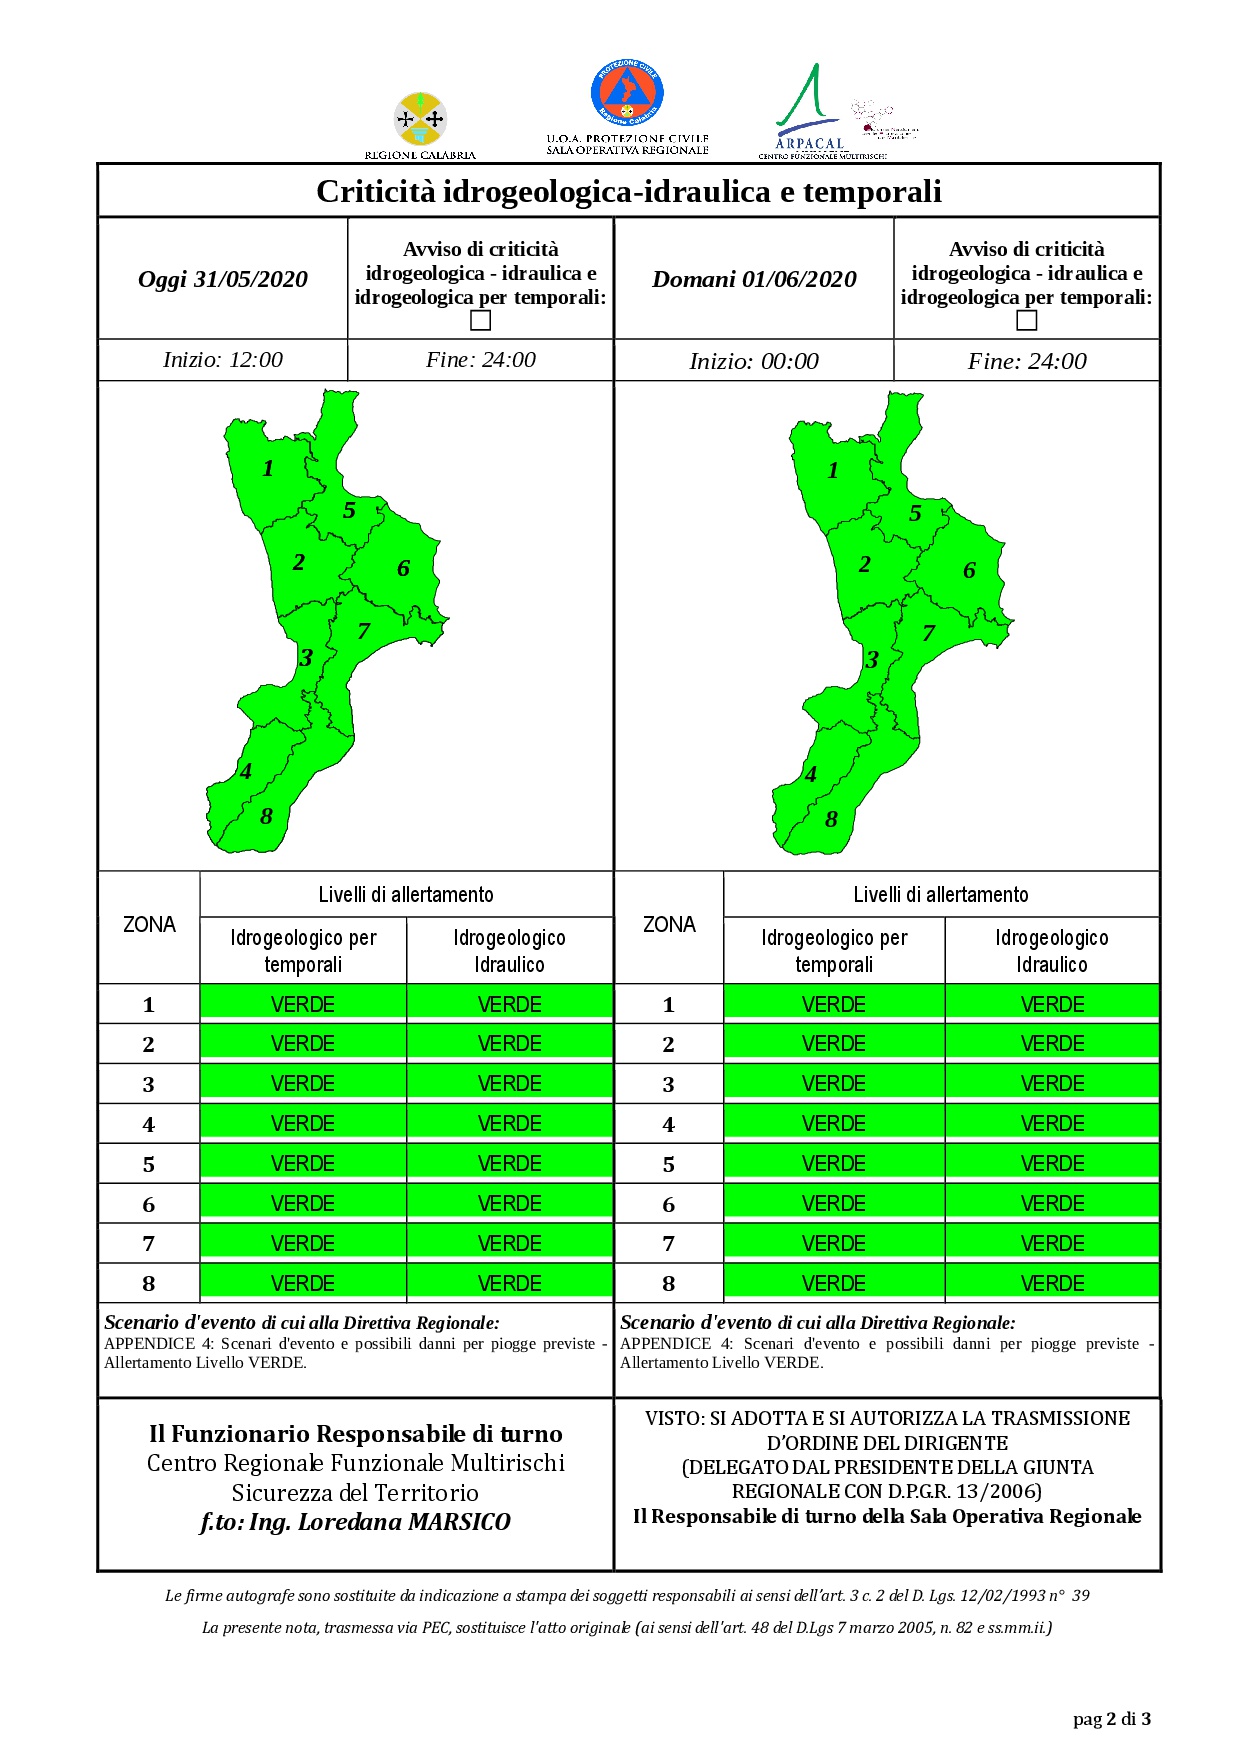 Criticità idrogeologica-idraulica e temporali in Calabria 31-05-2020